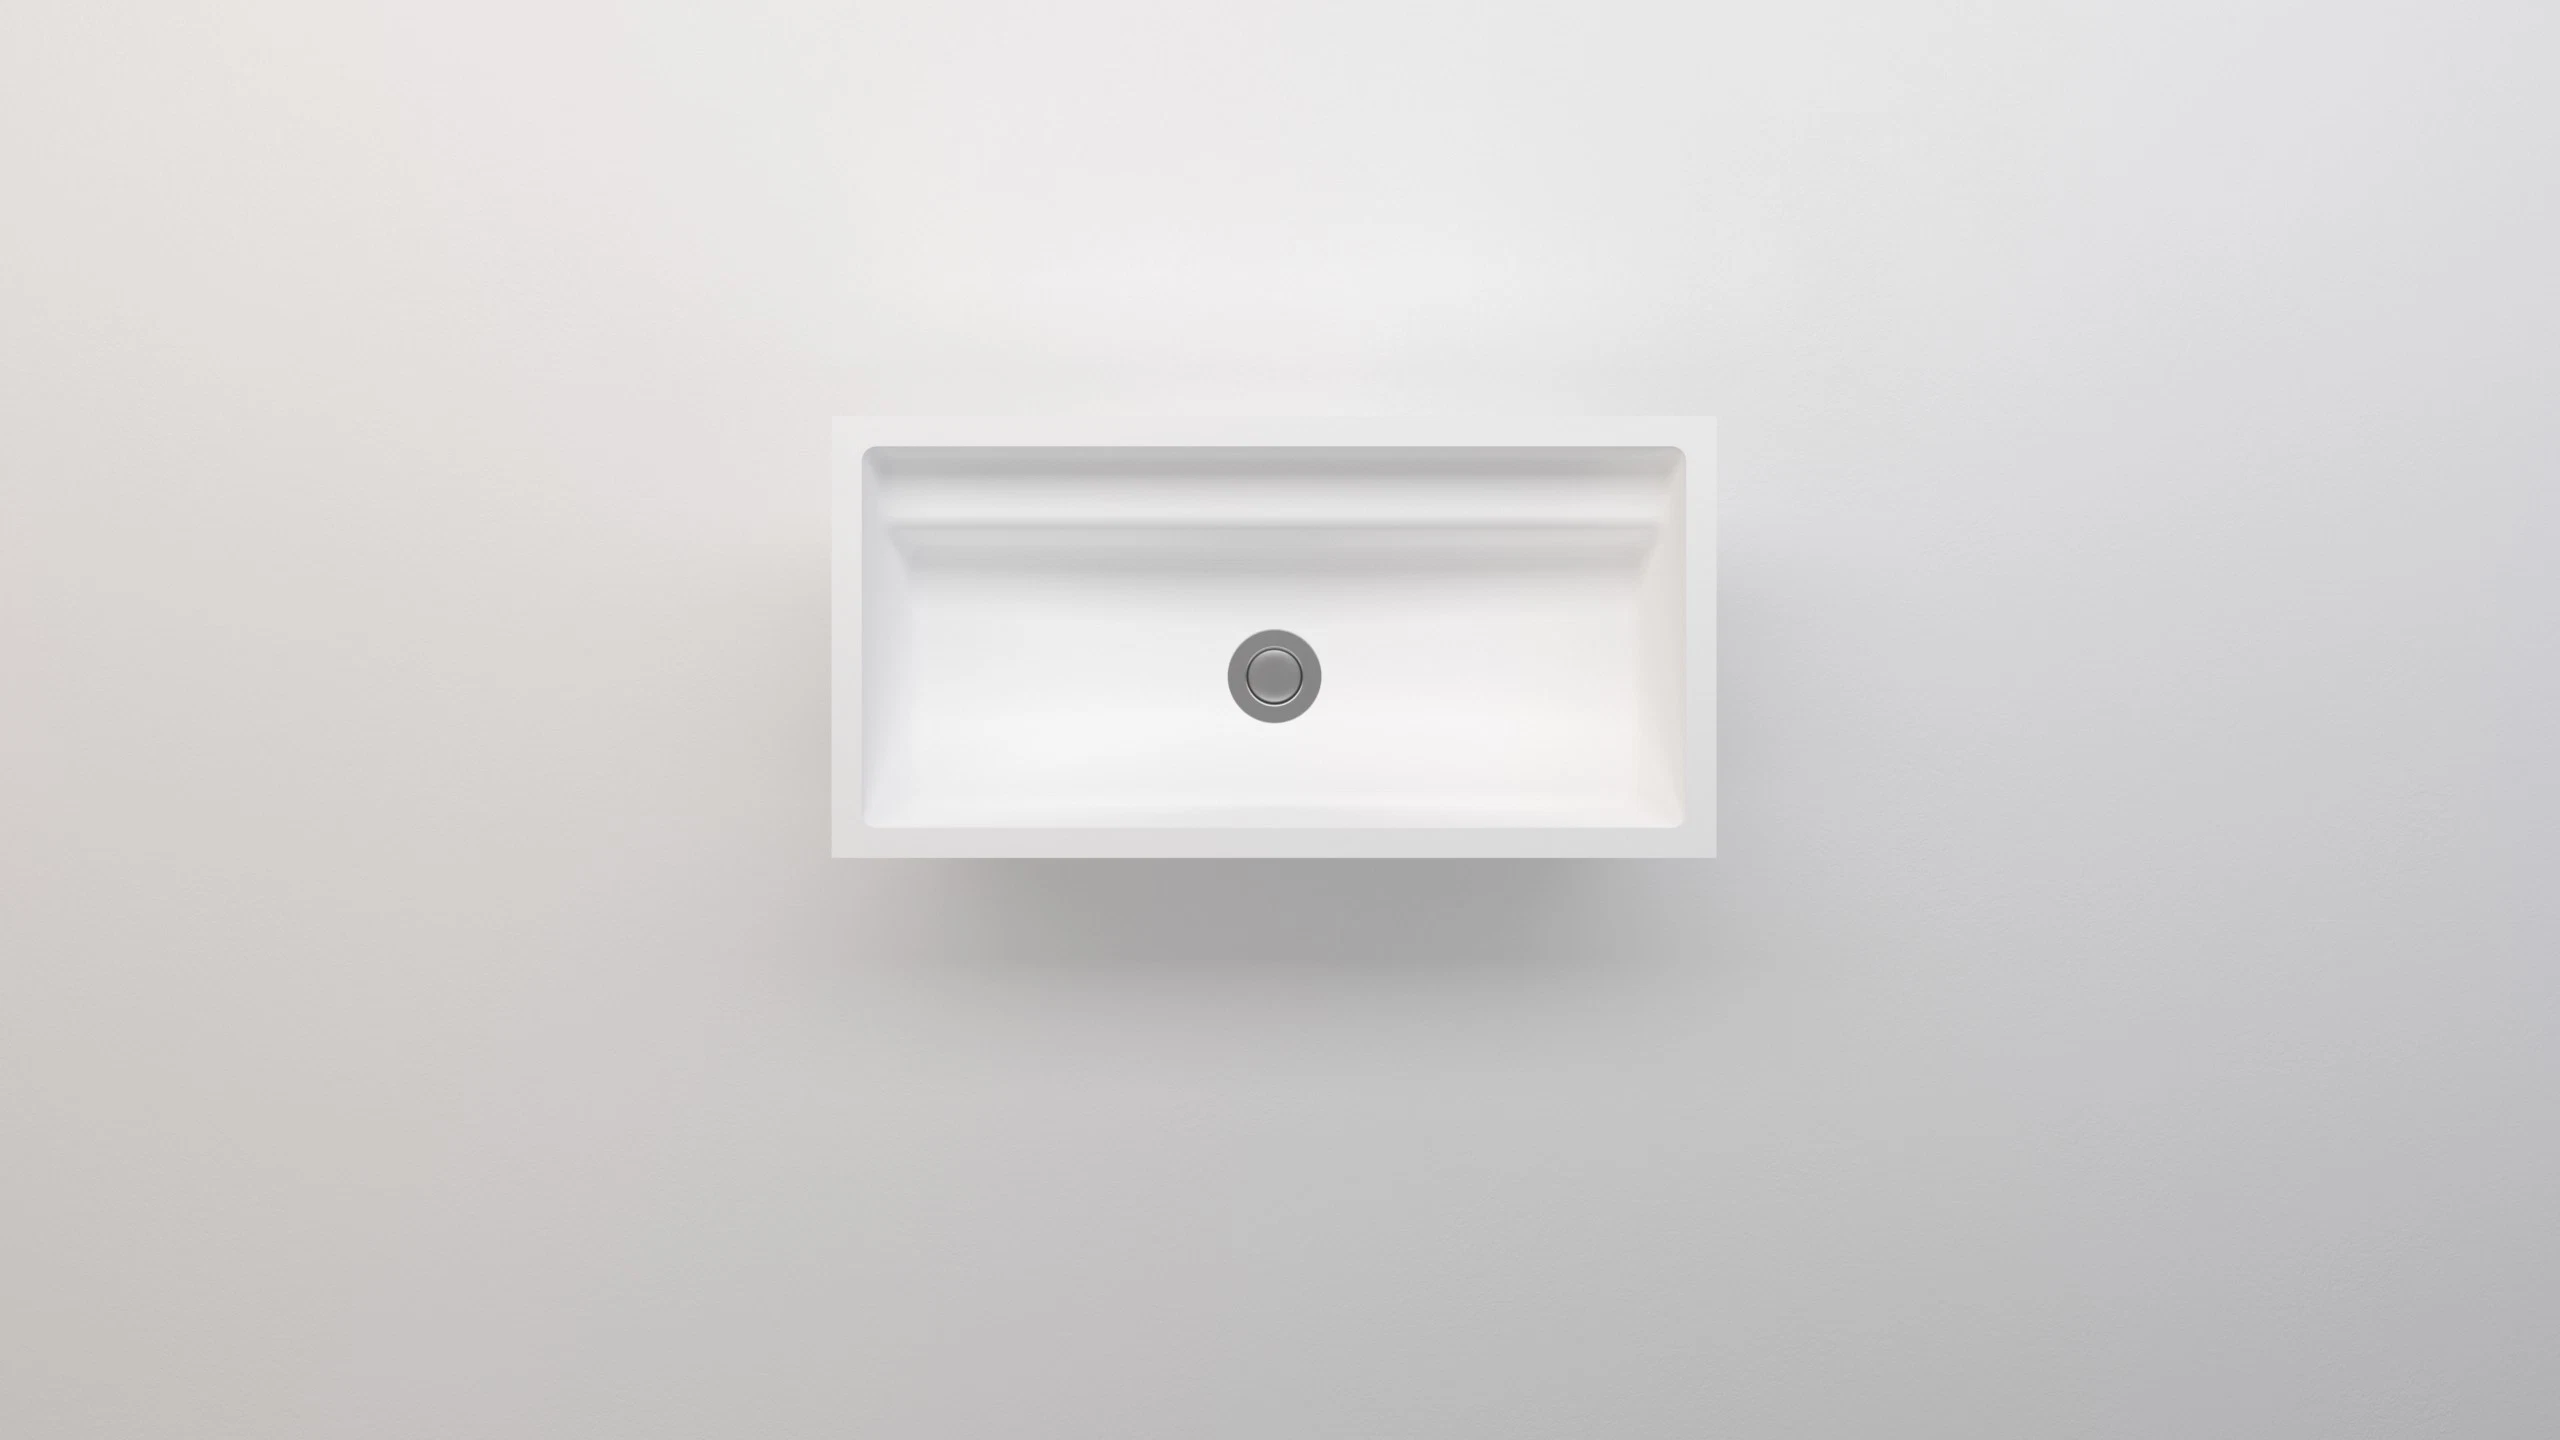 Stylish Solid Surface Rectangular Stone Acrylic Solid Surface Wash Basin, Kitchen/ Bathroom Sink